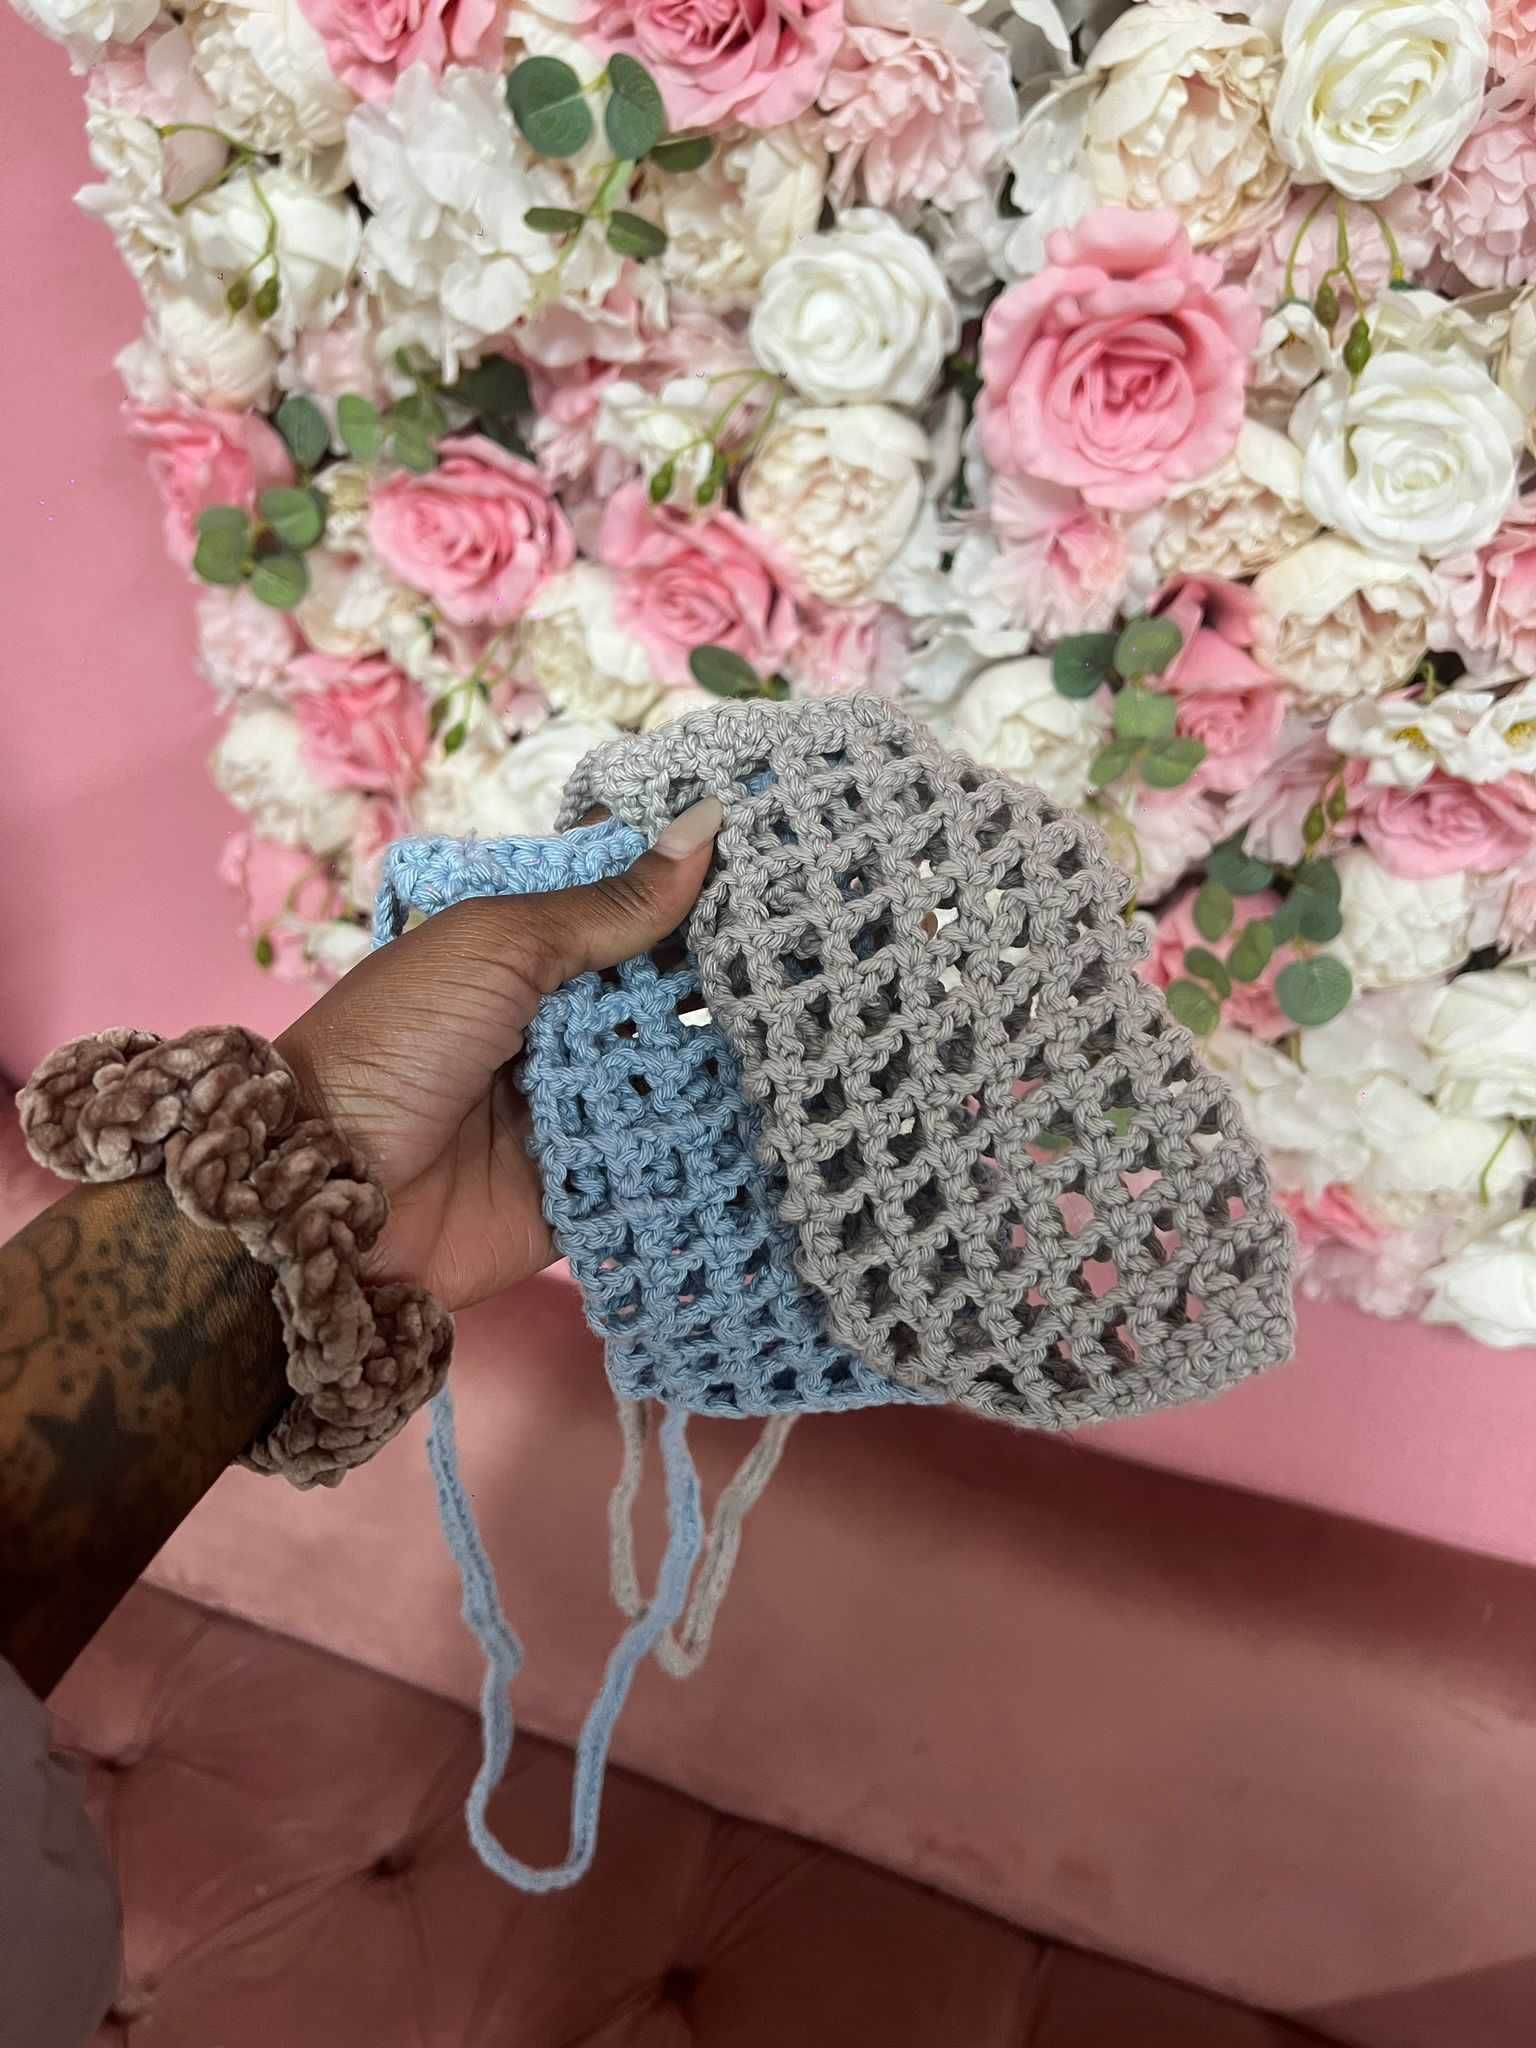 Phone bags (crochet)!